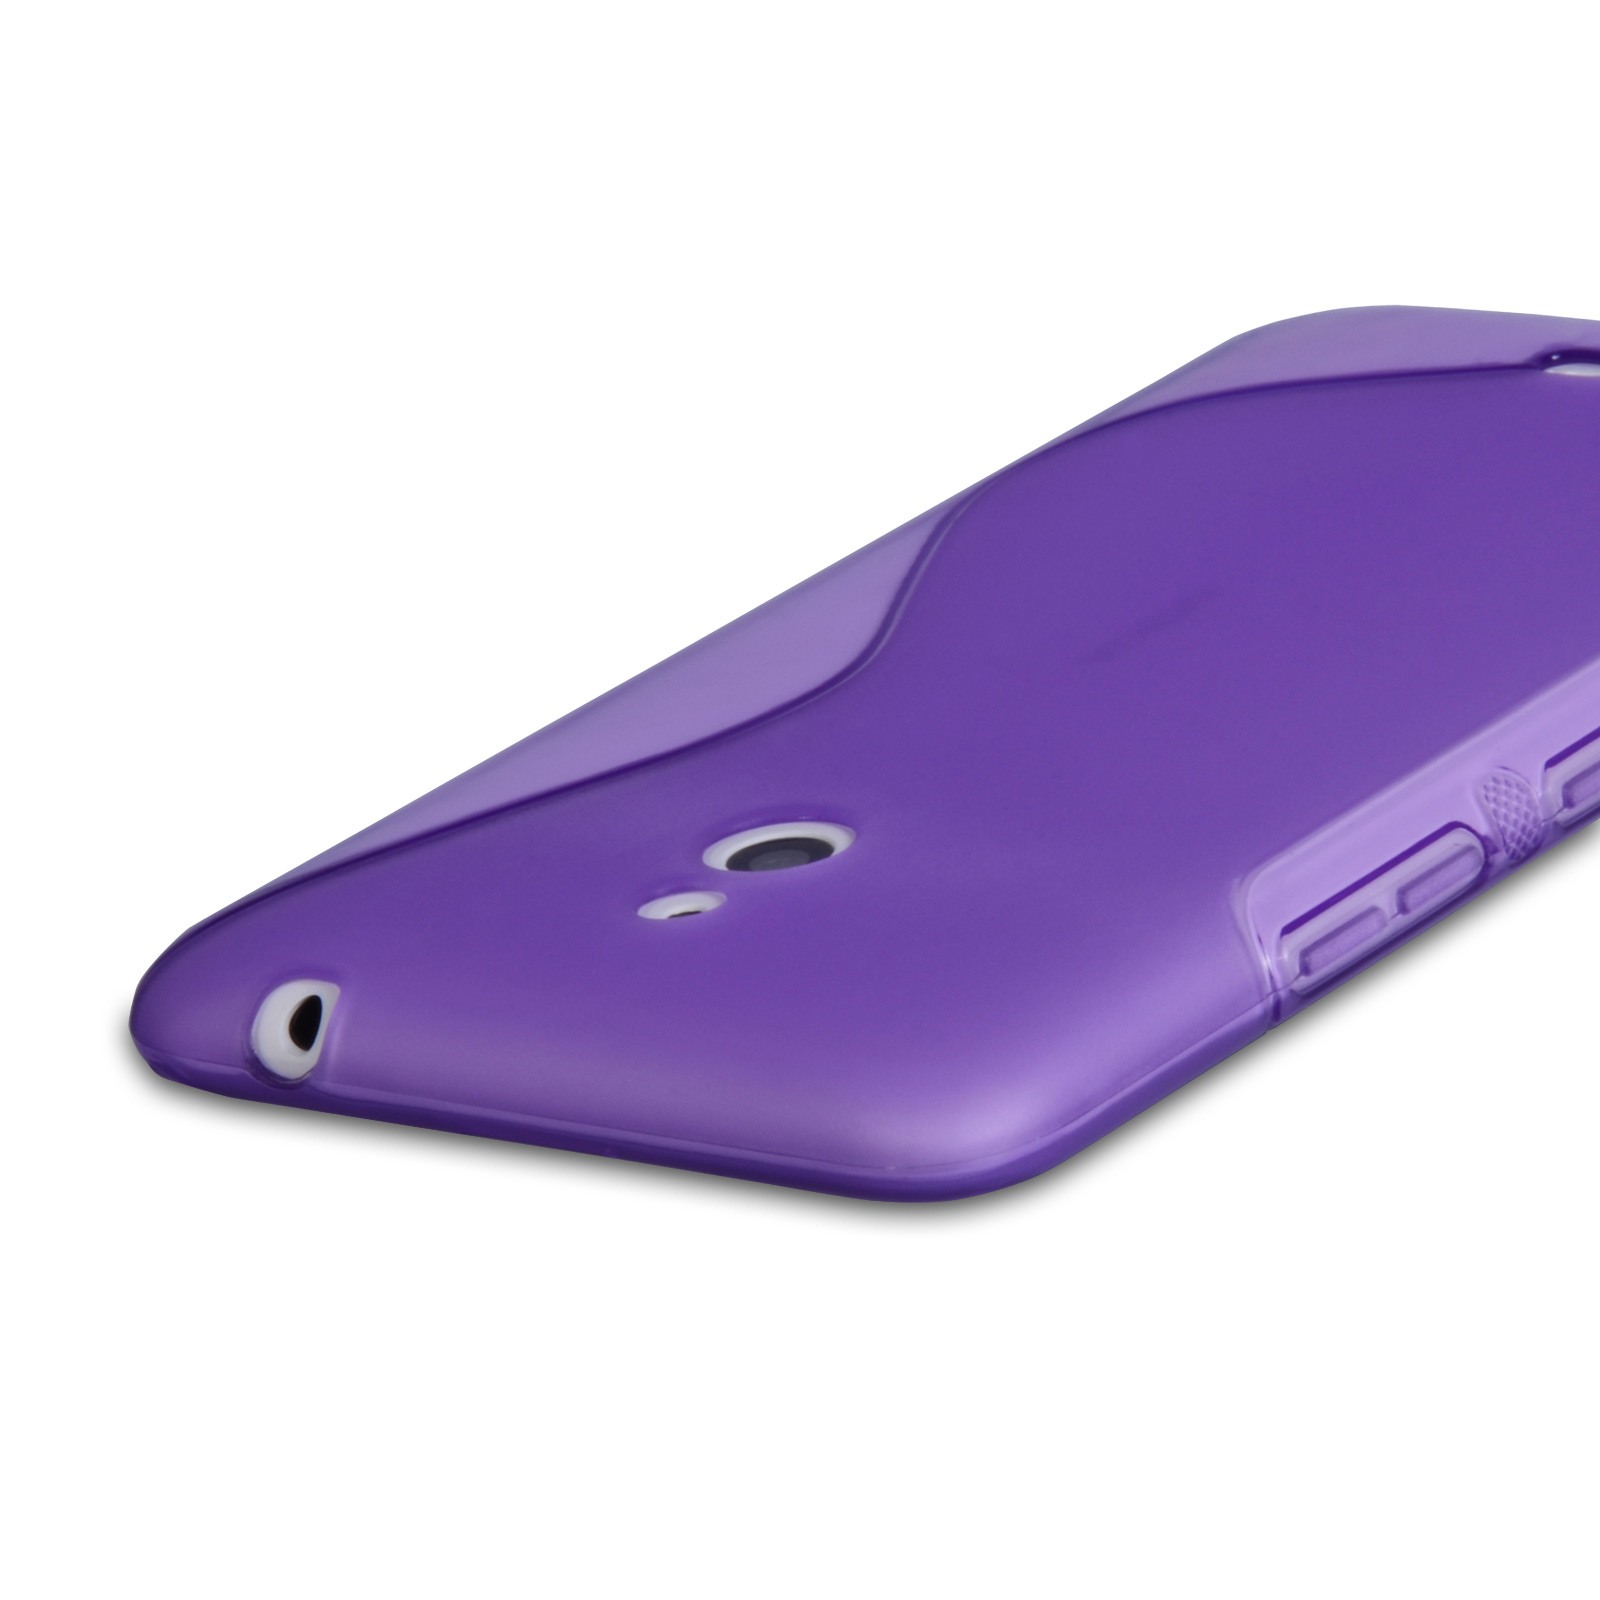 Caseflex Nokia Lumia 1320 Silicone Gel S-Line Case - Purple